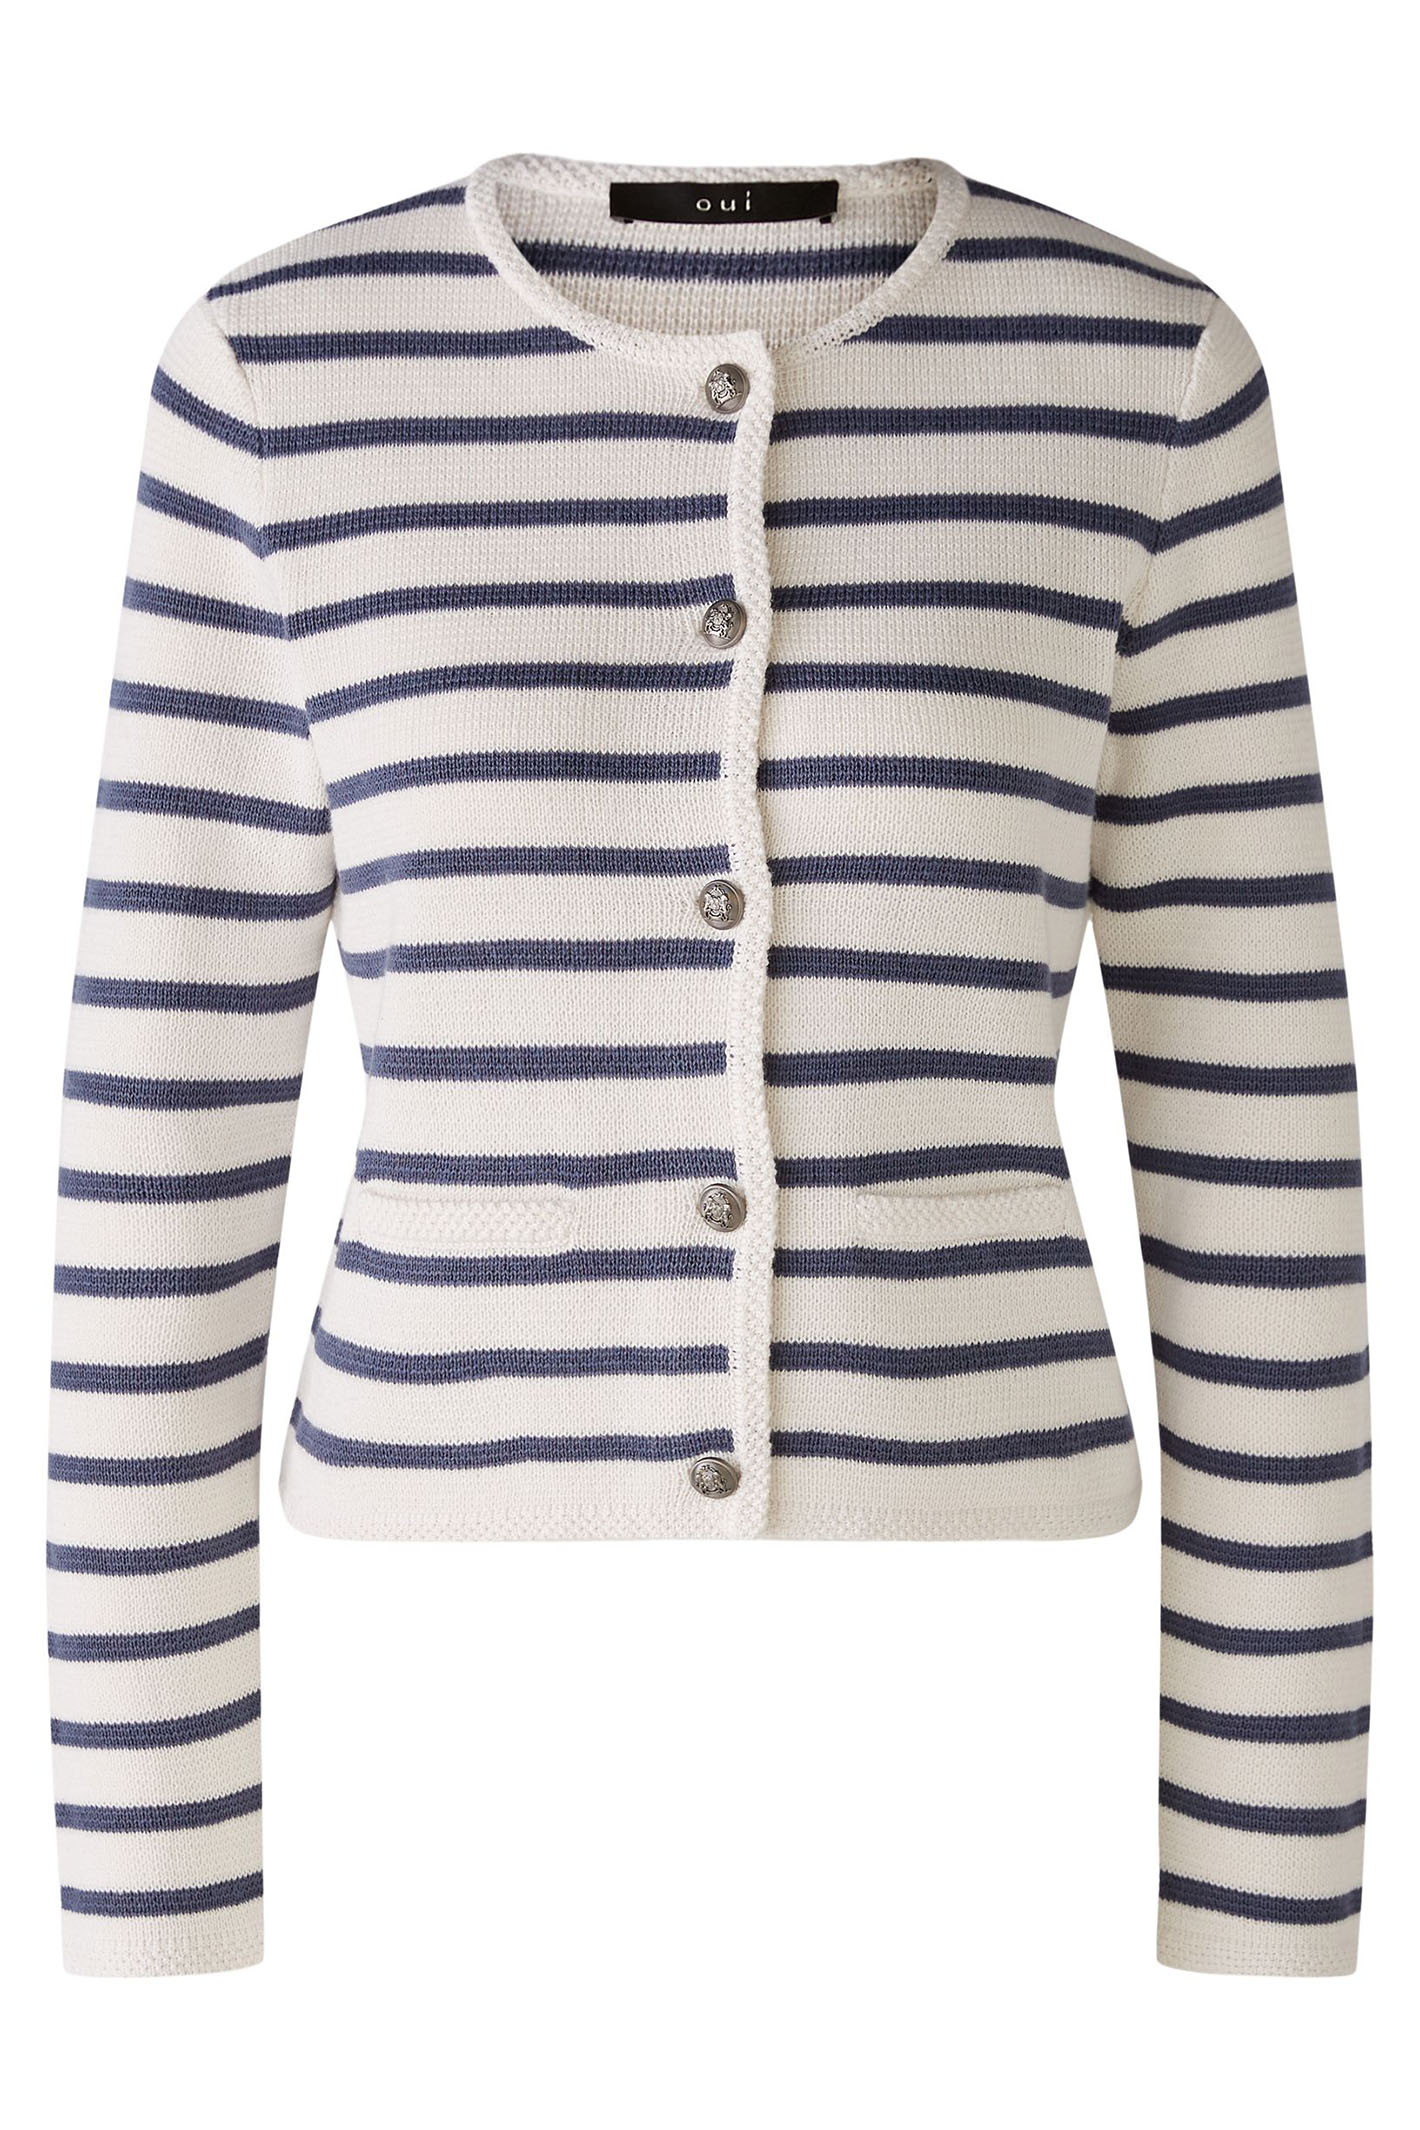 SLINKY BRAND BLUE White Cardigan Sweater Size 1X £7.88 - PicClick UK